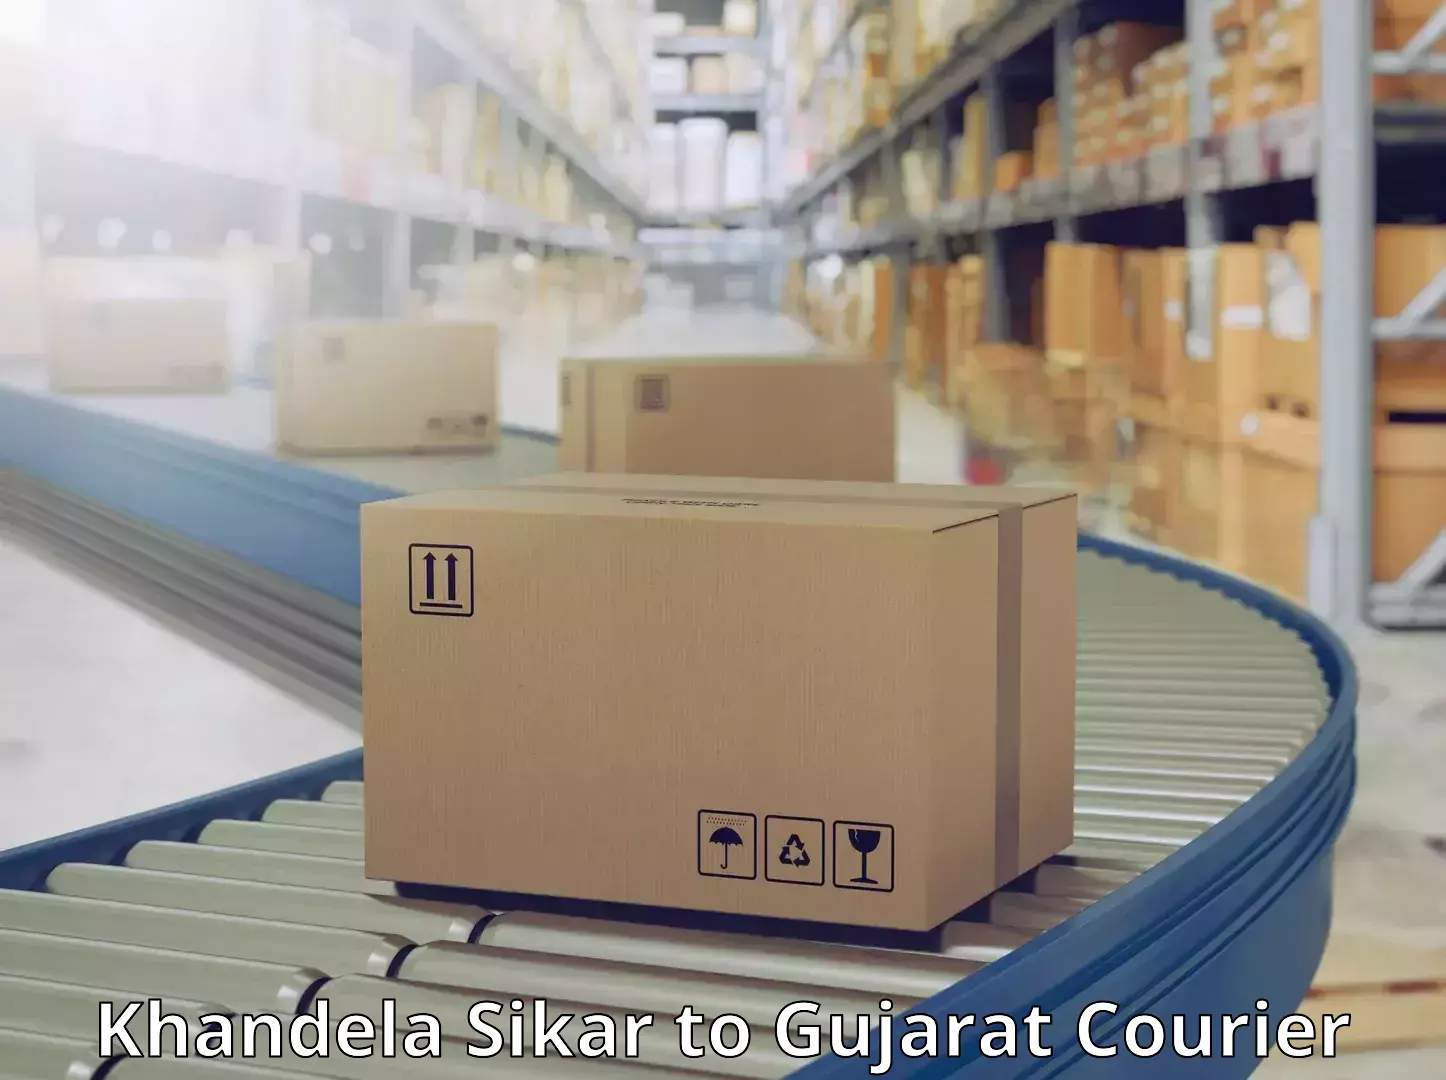 Premium courier solutions Khandela Sikar to Sanand